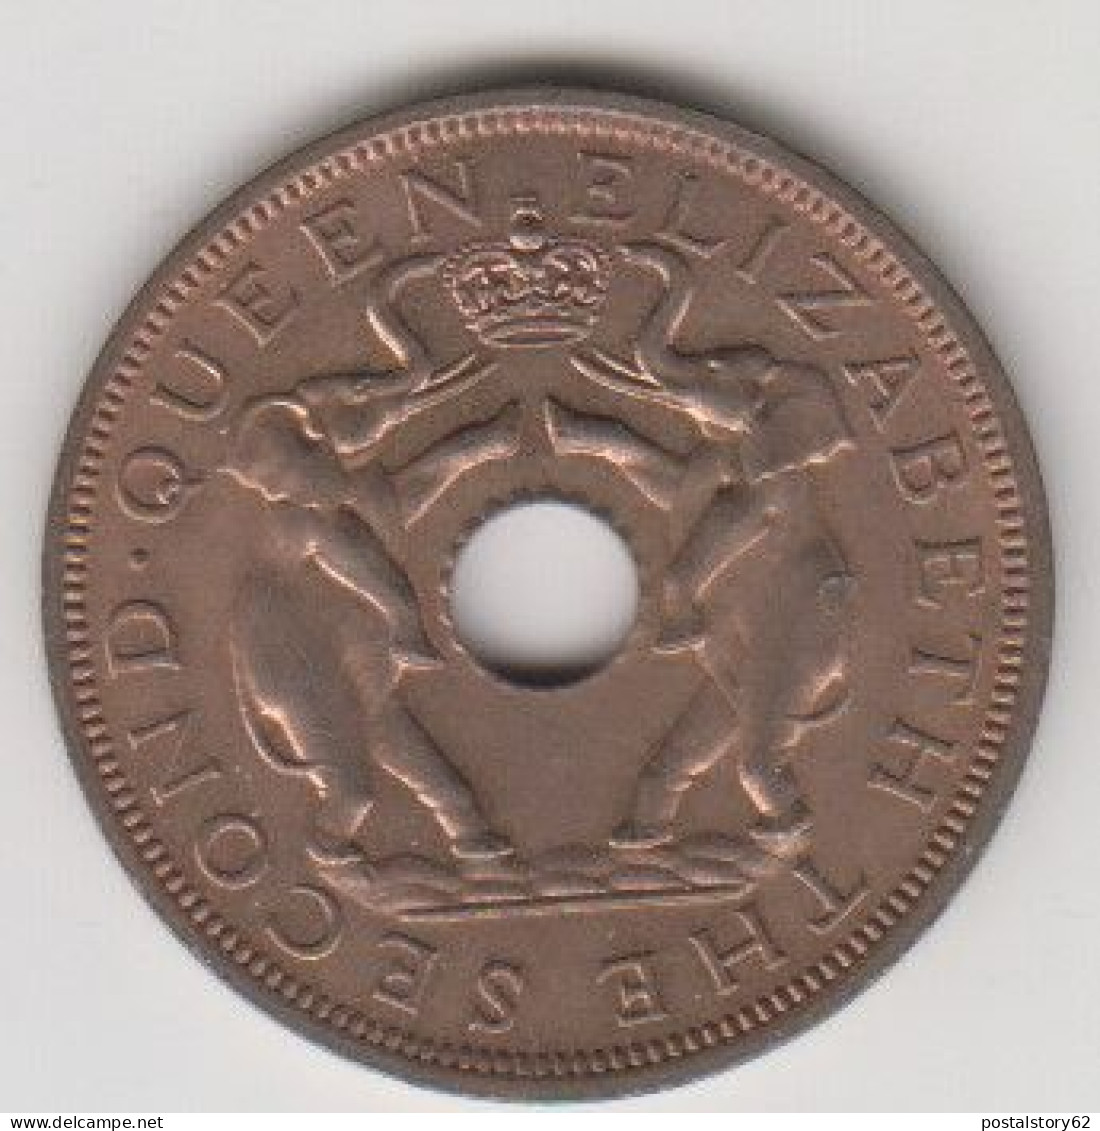 Rhodesia & Nyasaland One Penny 1958 FDC Unc. - Rhodesia